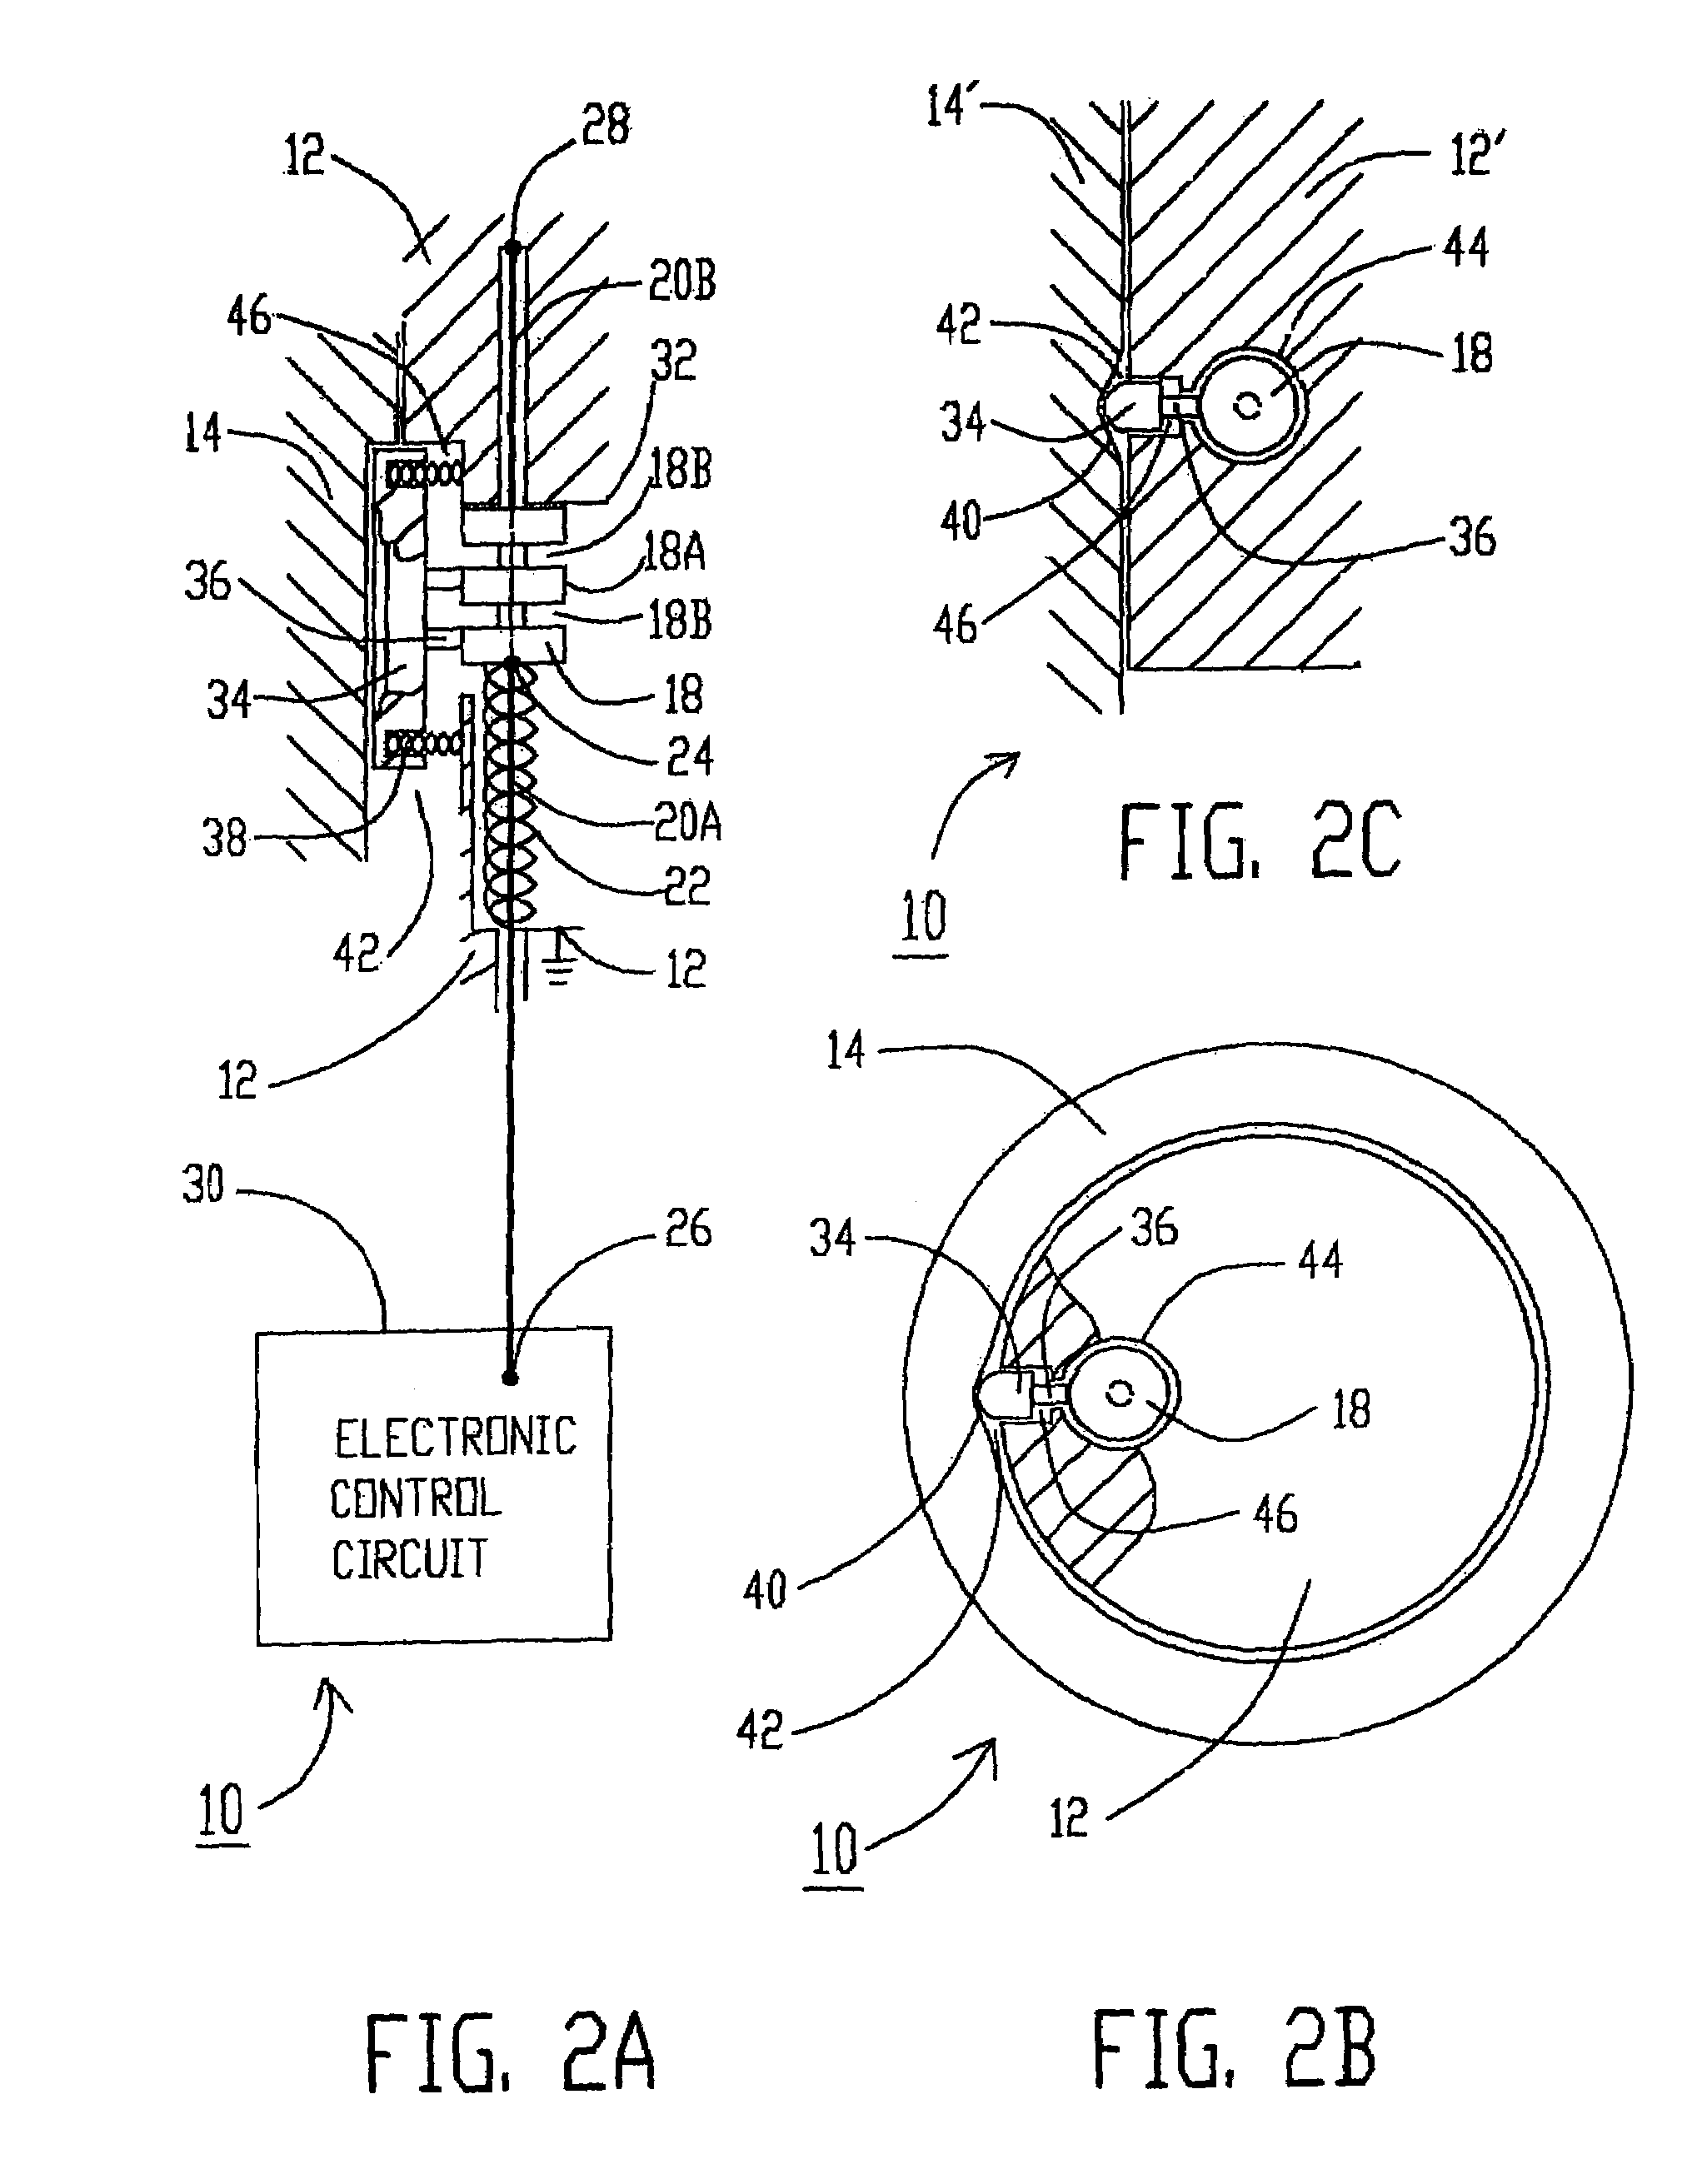 Electromechanical lock employing shape memory metal wire